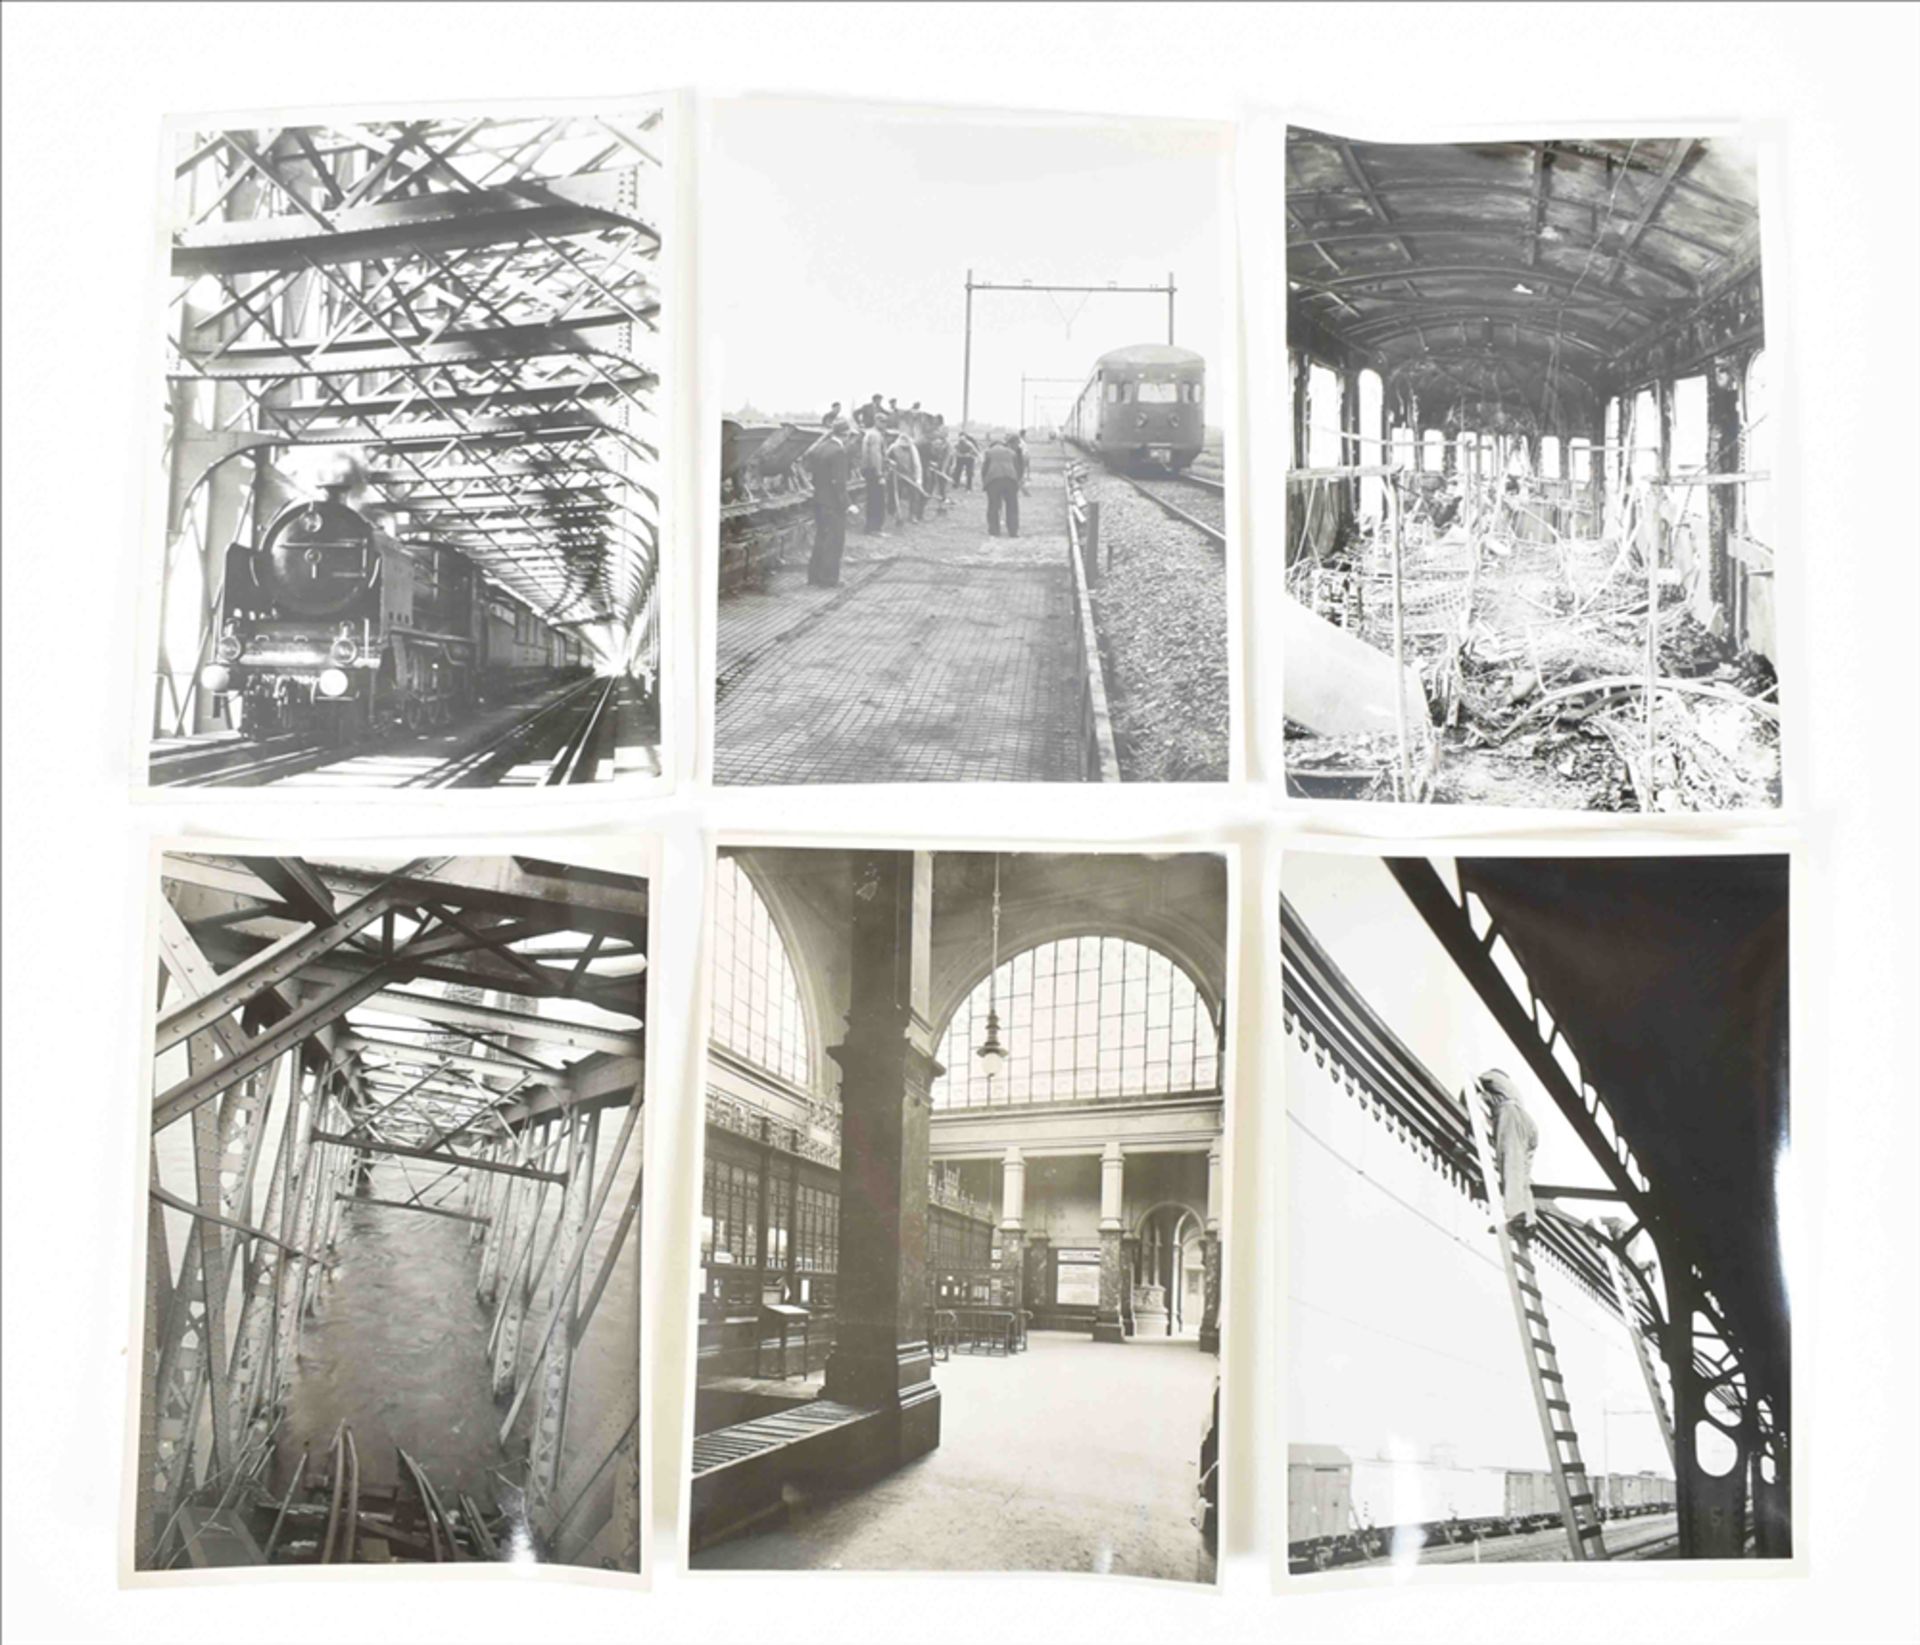 55 photos of trains, railways, train stations, etc. - Image 5 of 9